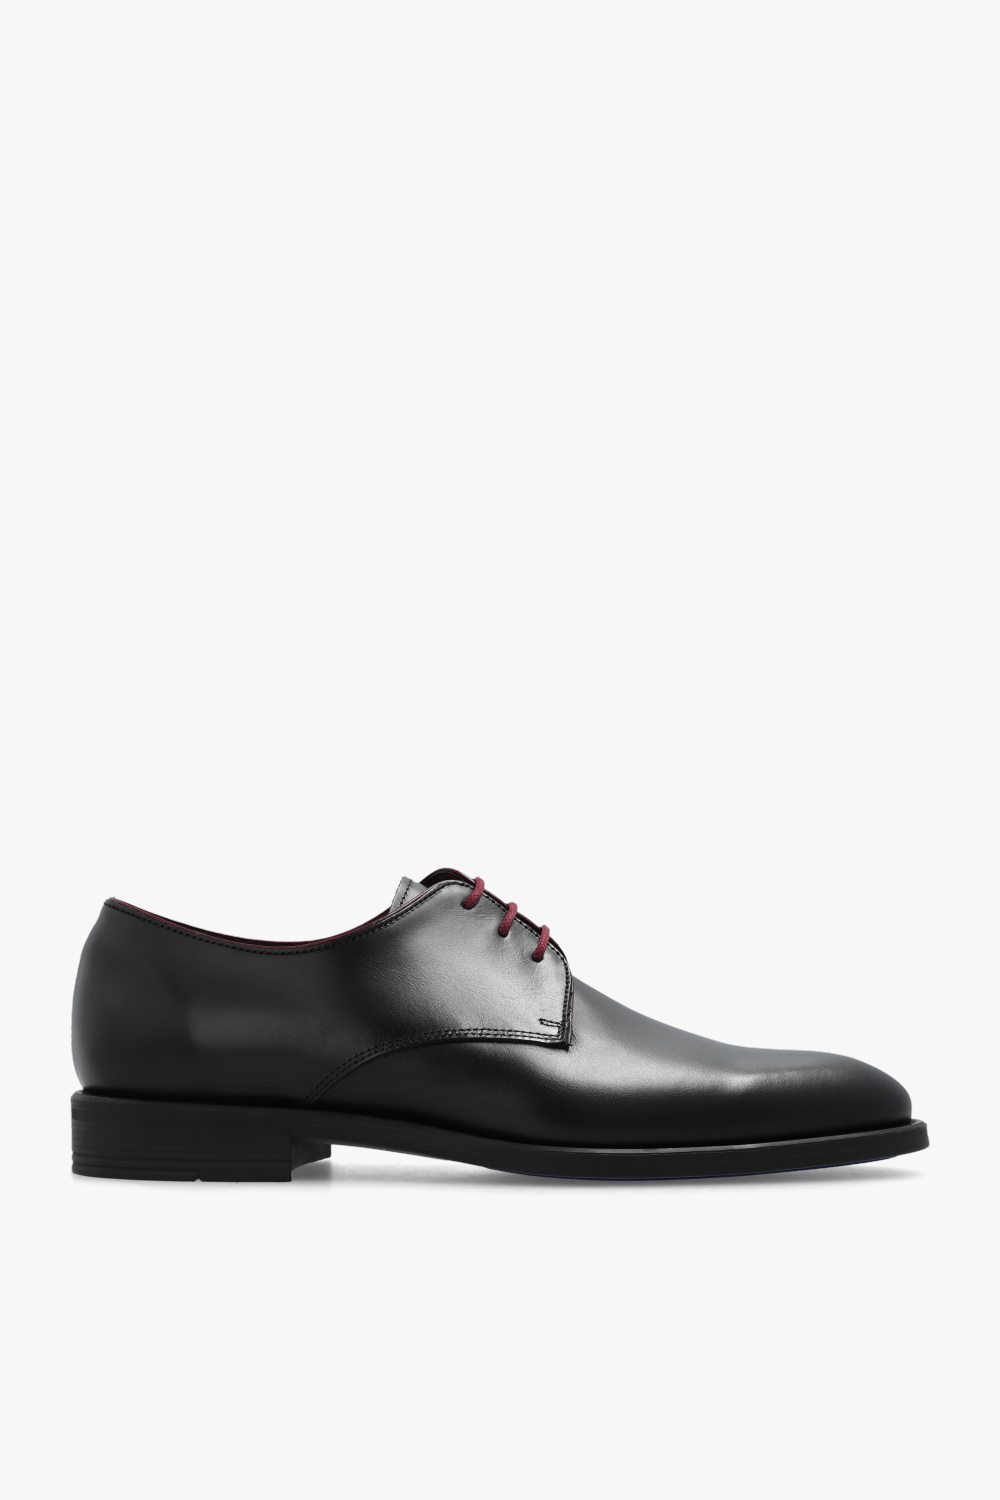 PS Paul Smith ‘Bayard’ leather shoes | Men's Shoes | Vitkac